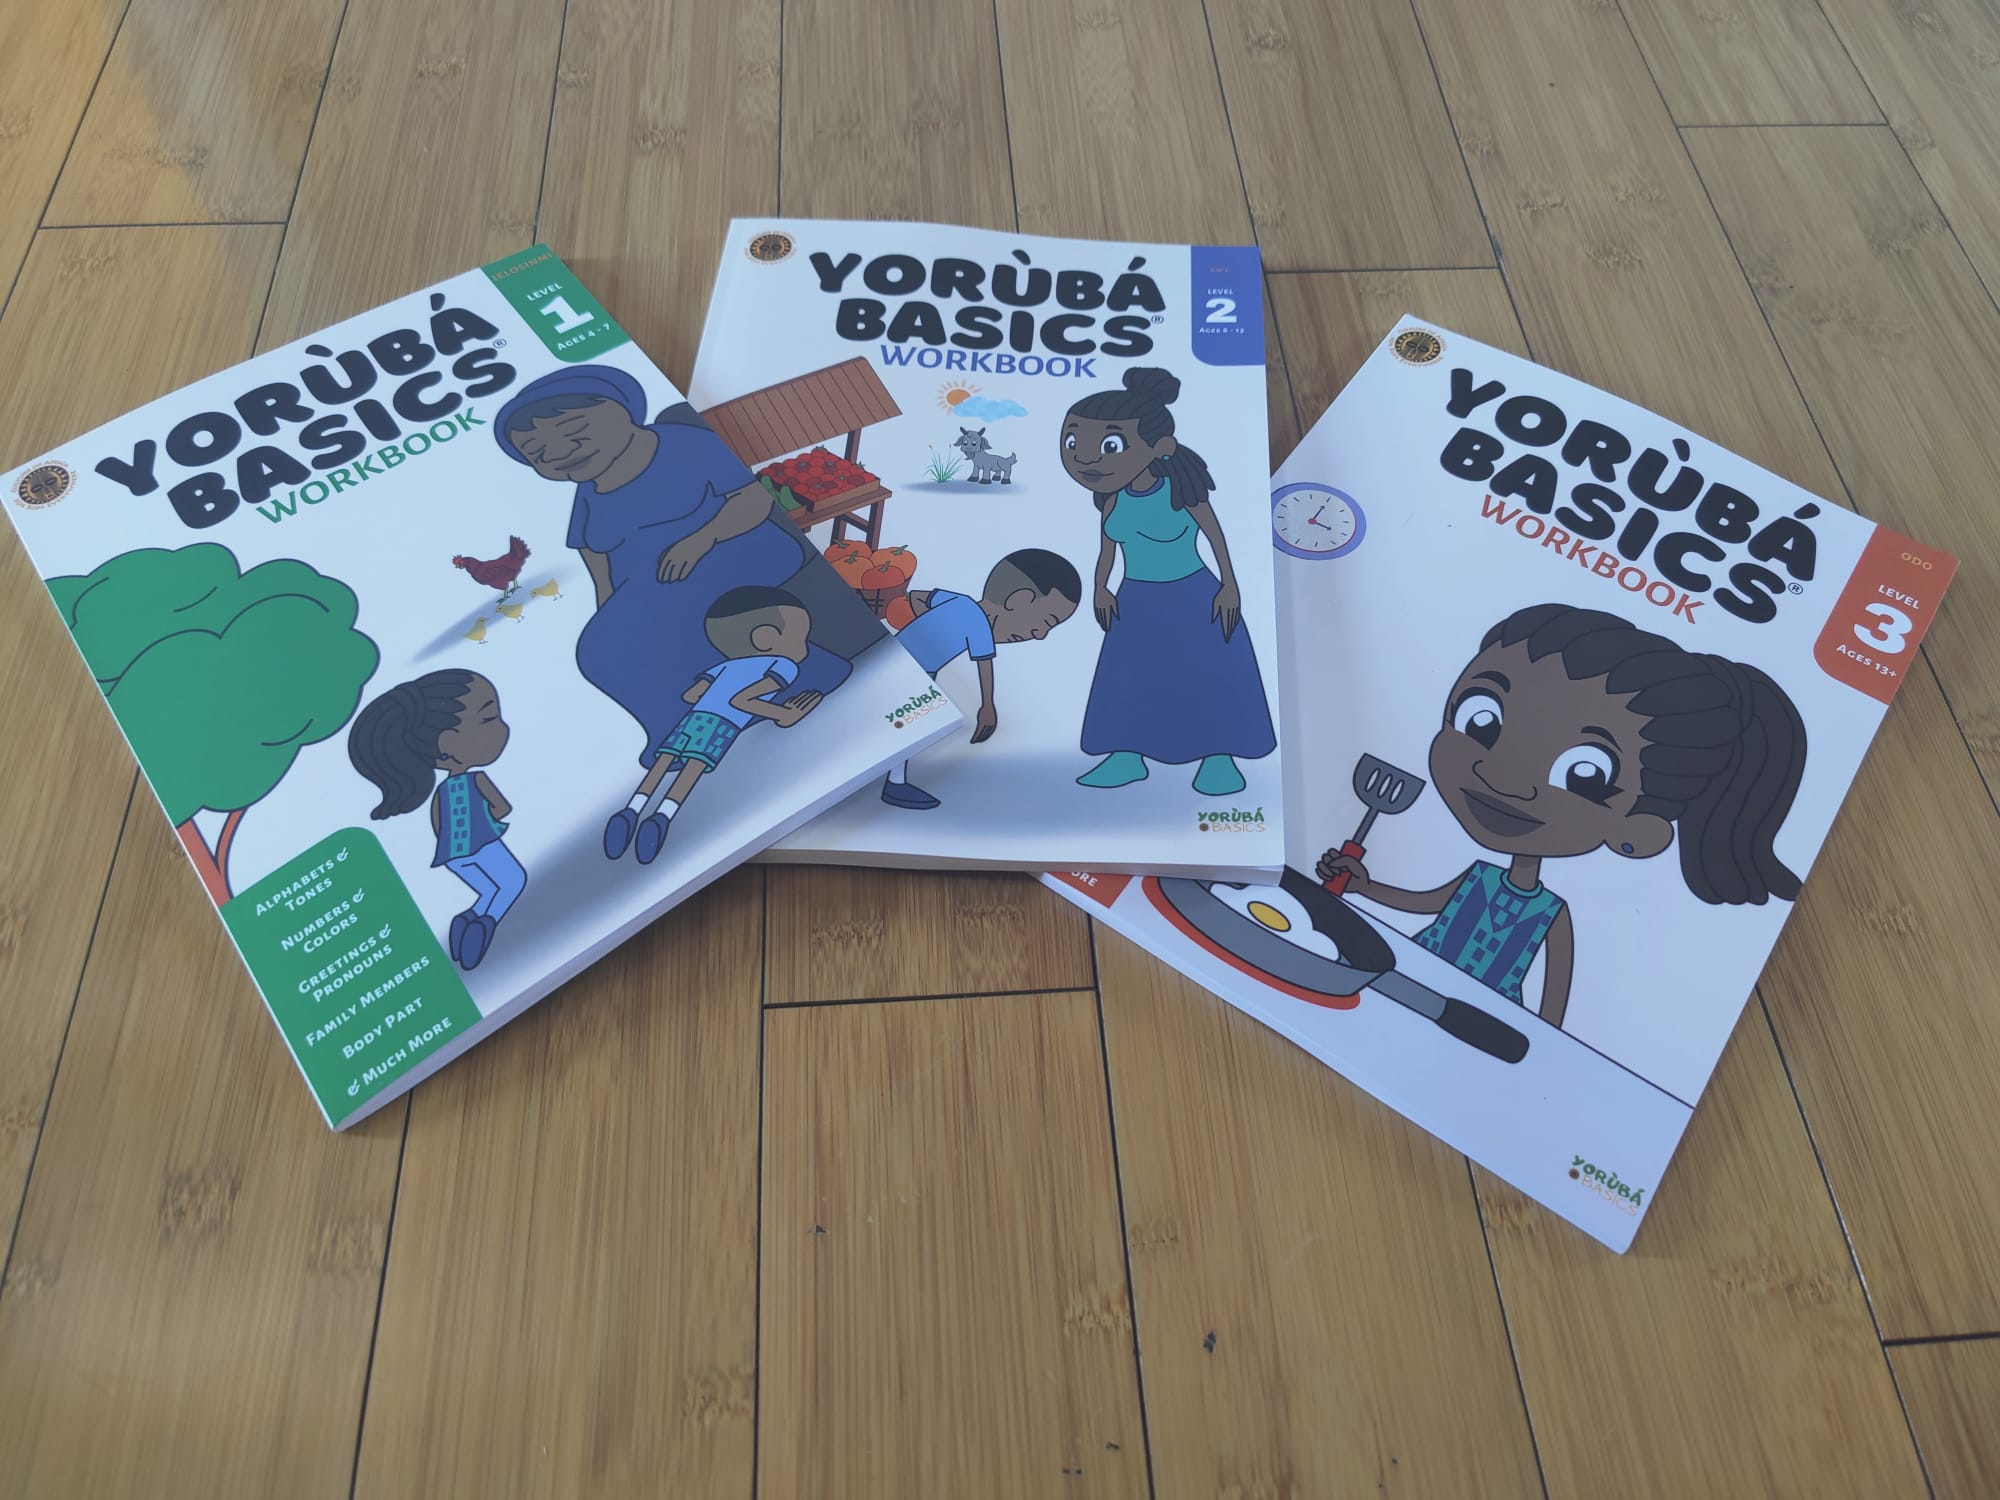 Yoruba Basics Workbooks